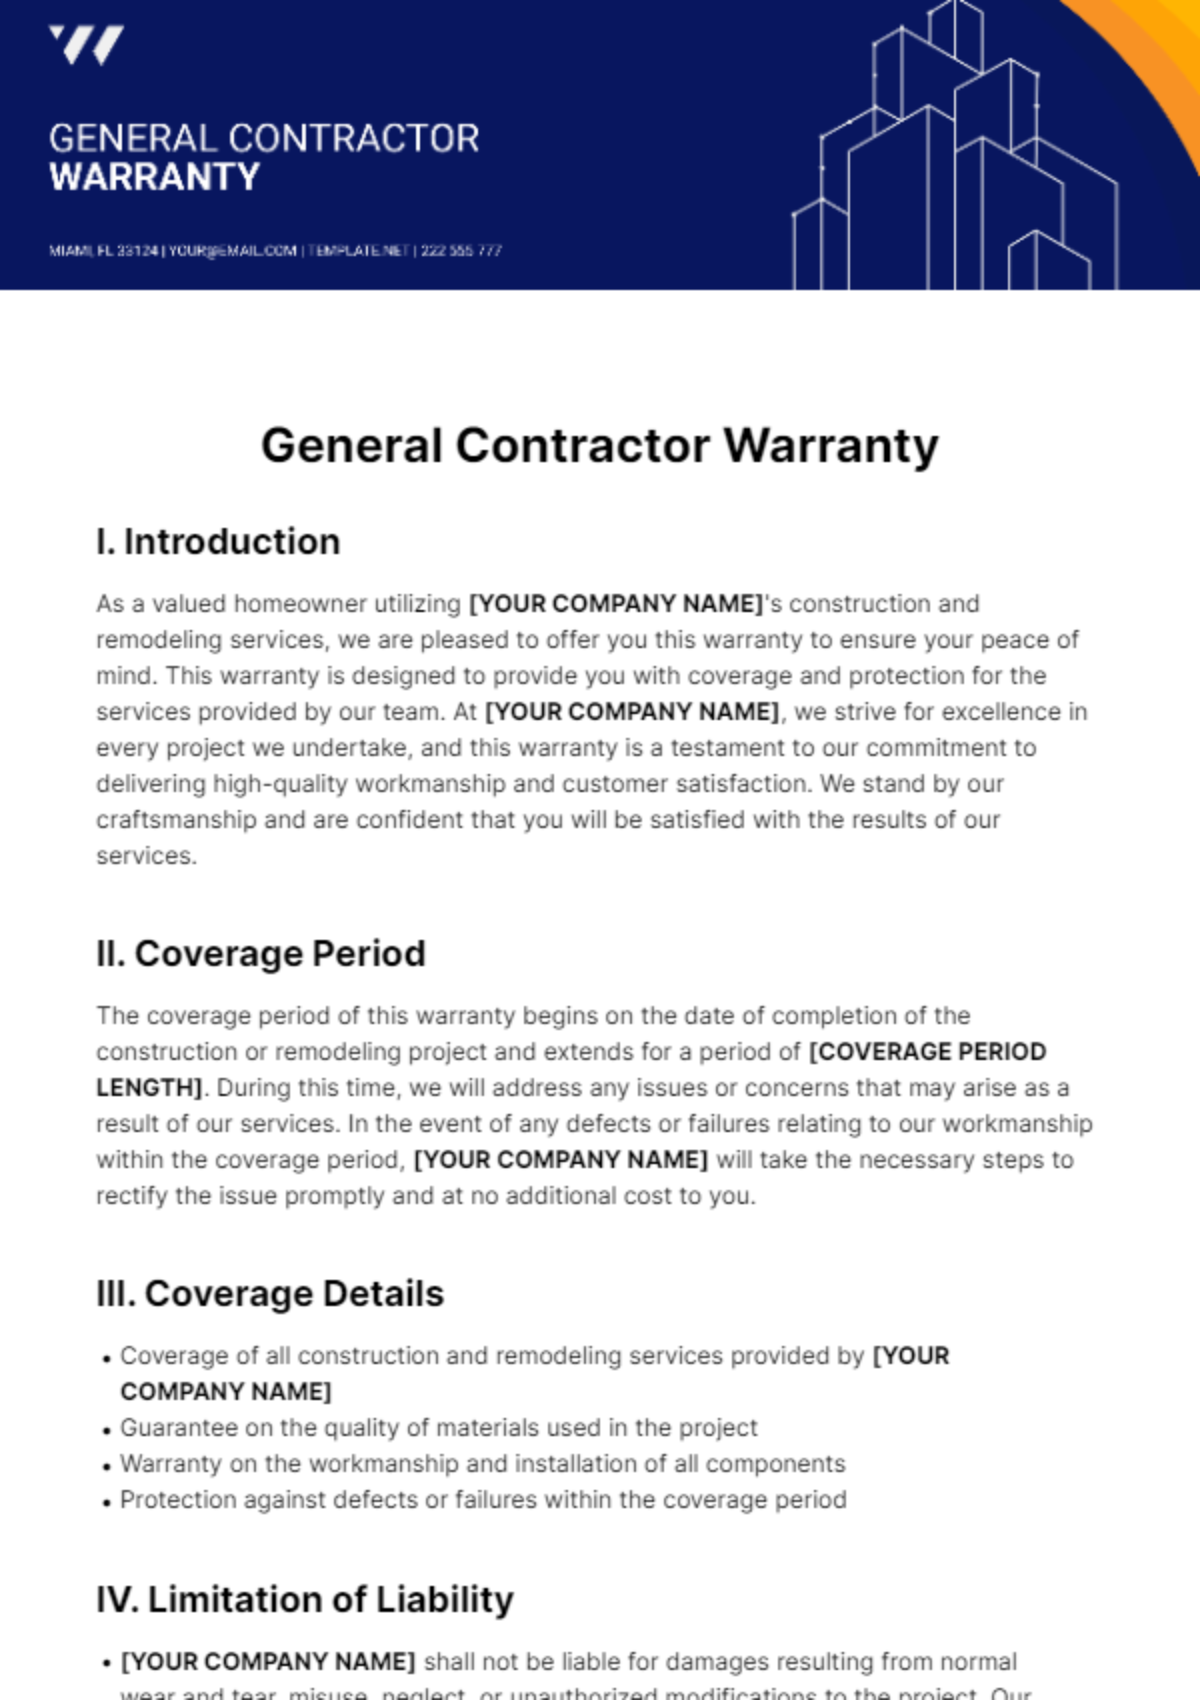 General Contractor Warranty Template